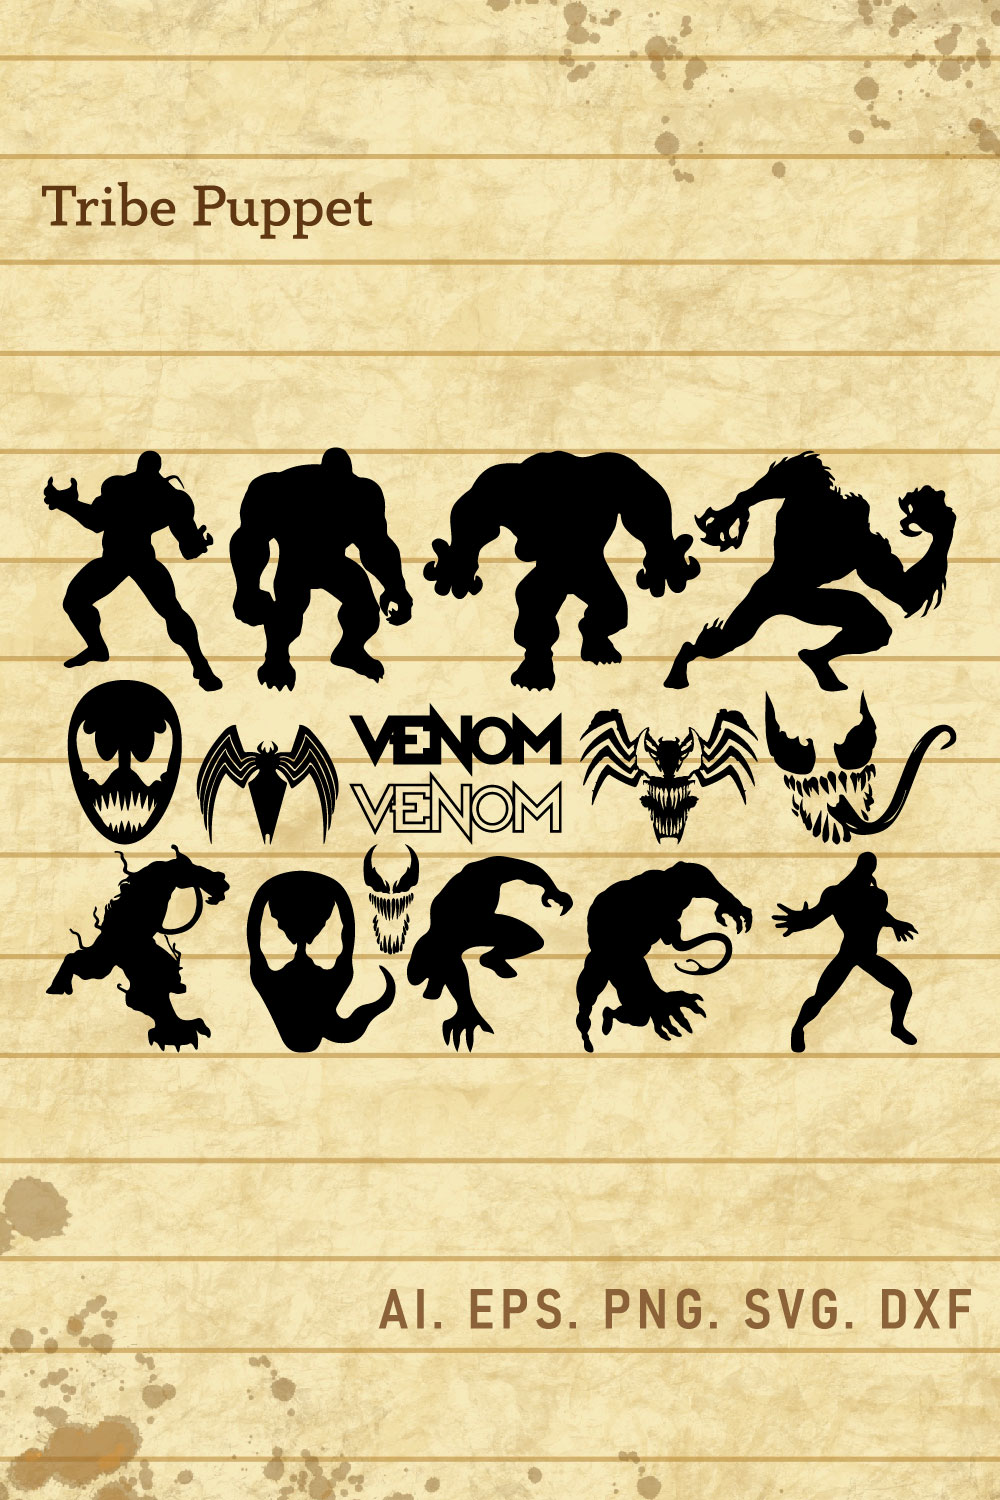 Venom SVG pinterest preview image.